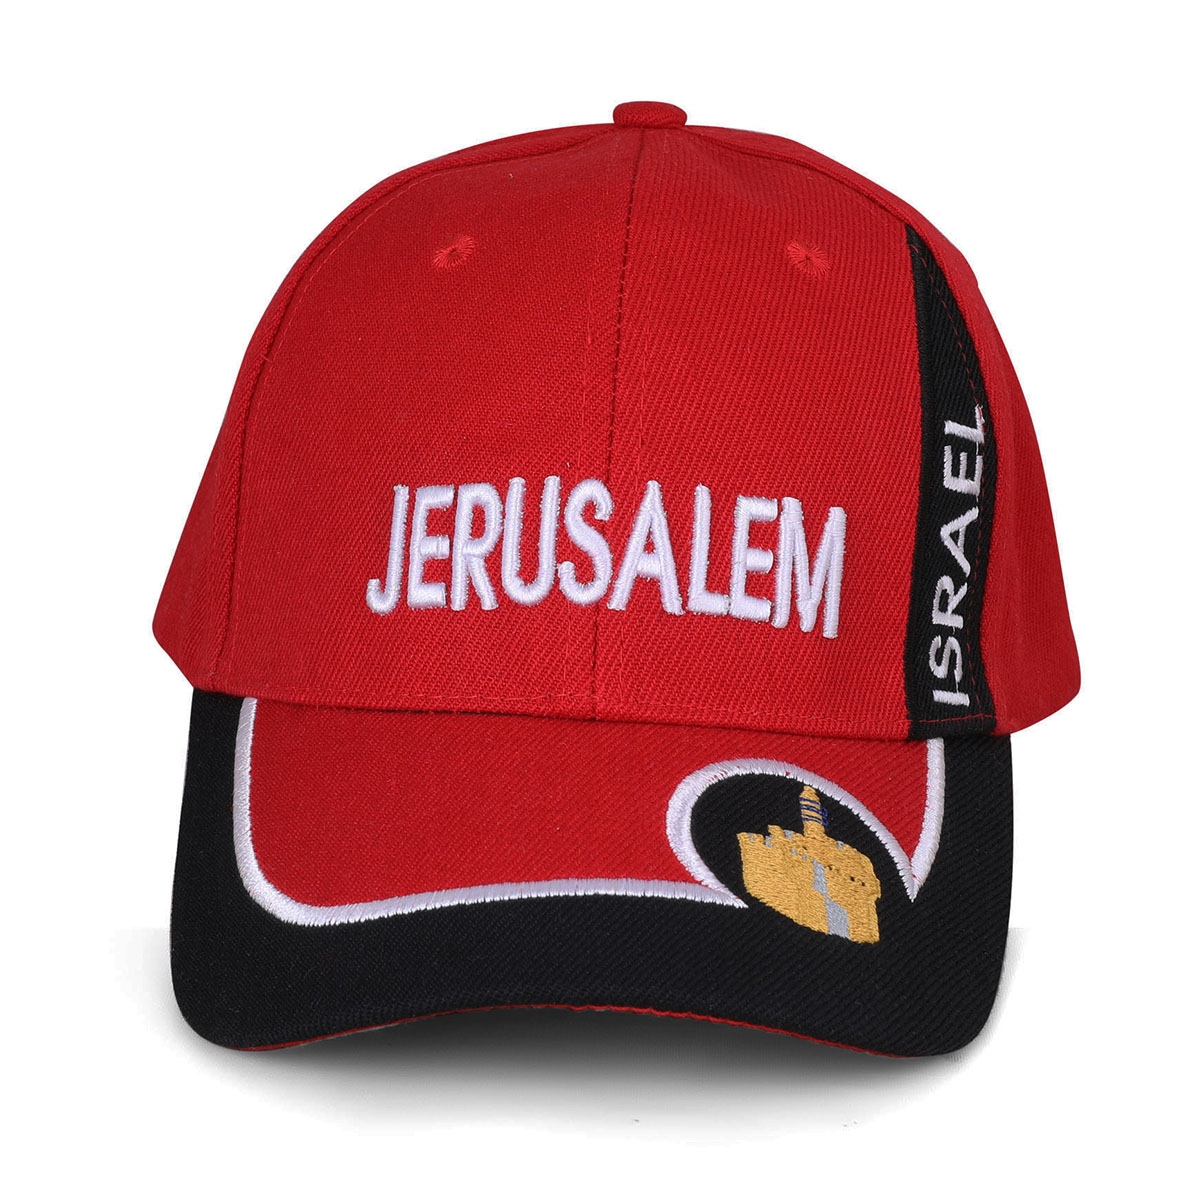 Jerusalem Israel Baseball Cap – Red and Black  - 1